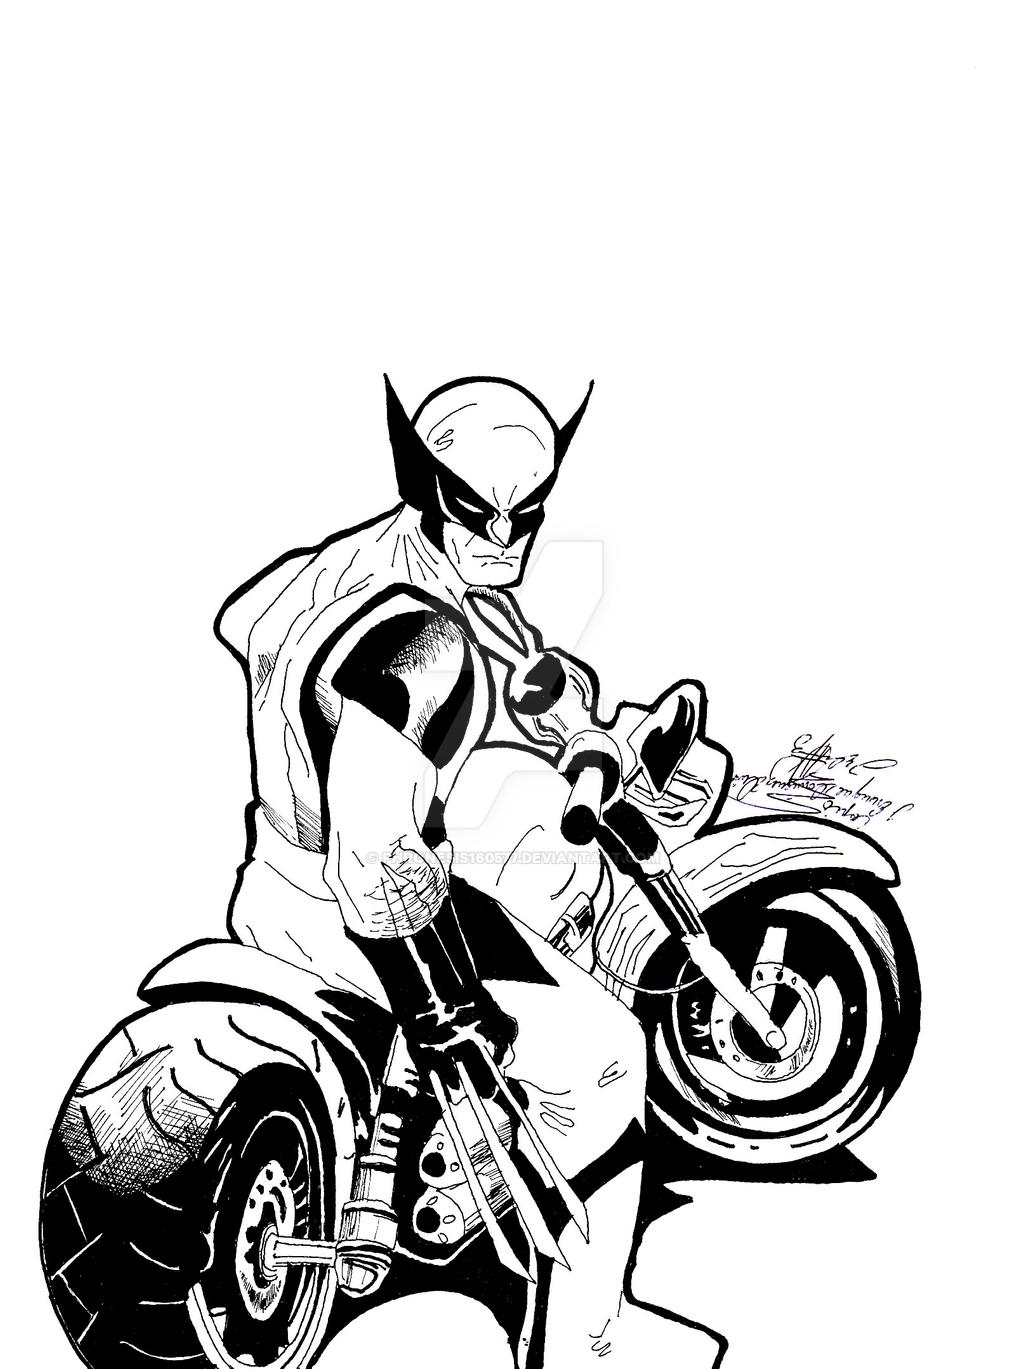 Esboco Wolverine motoqueiro by Pazotto on DeviantArt